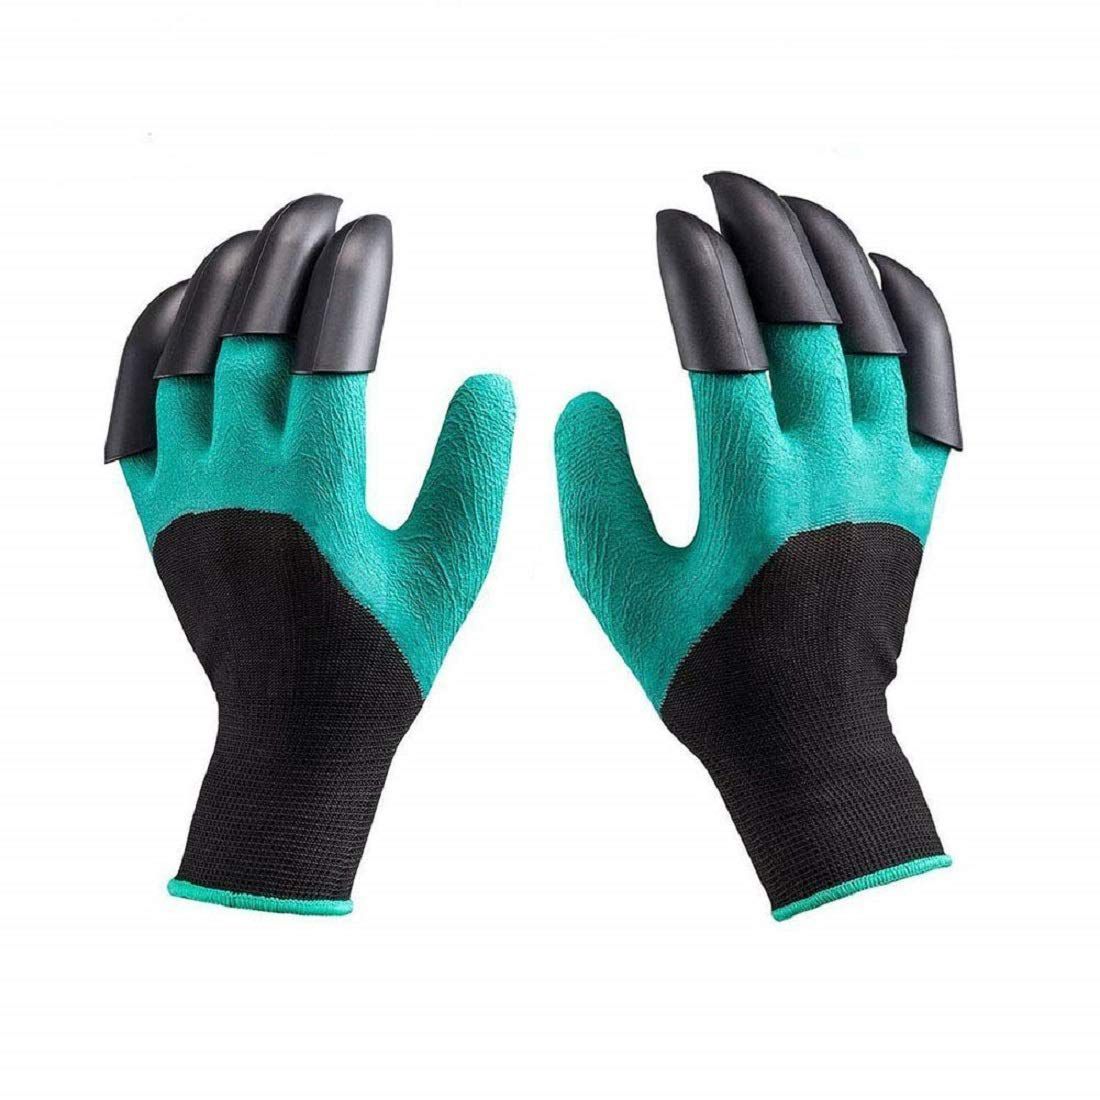 garden gloves meaning